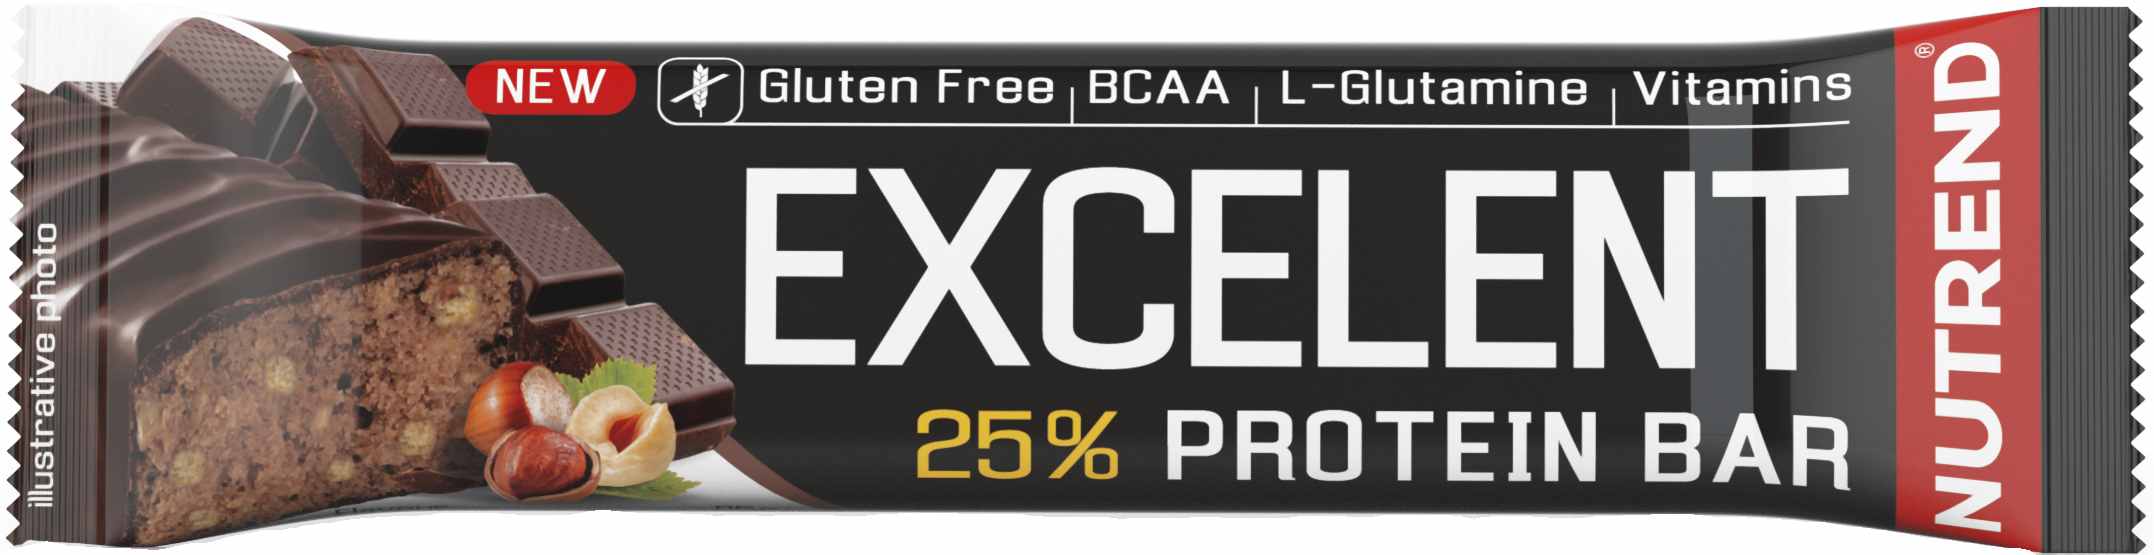 EXCELENT PROTEIN BAR 2x85+40G CHOCOLATE/NUT - Protein Bar